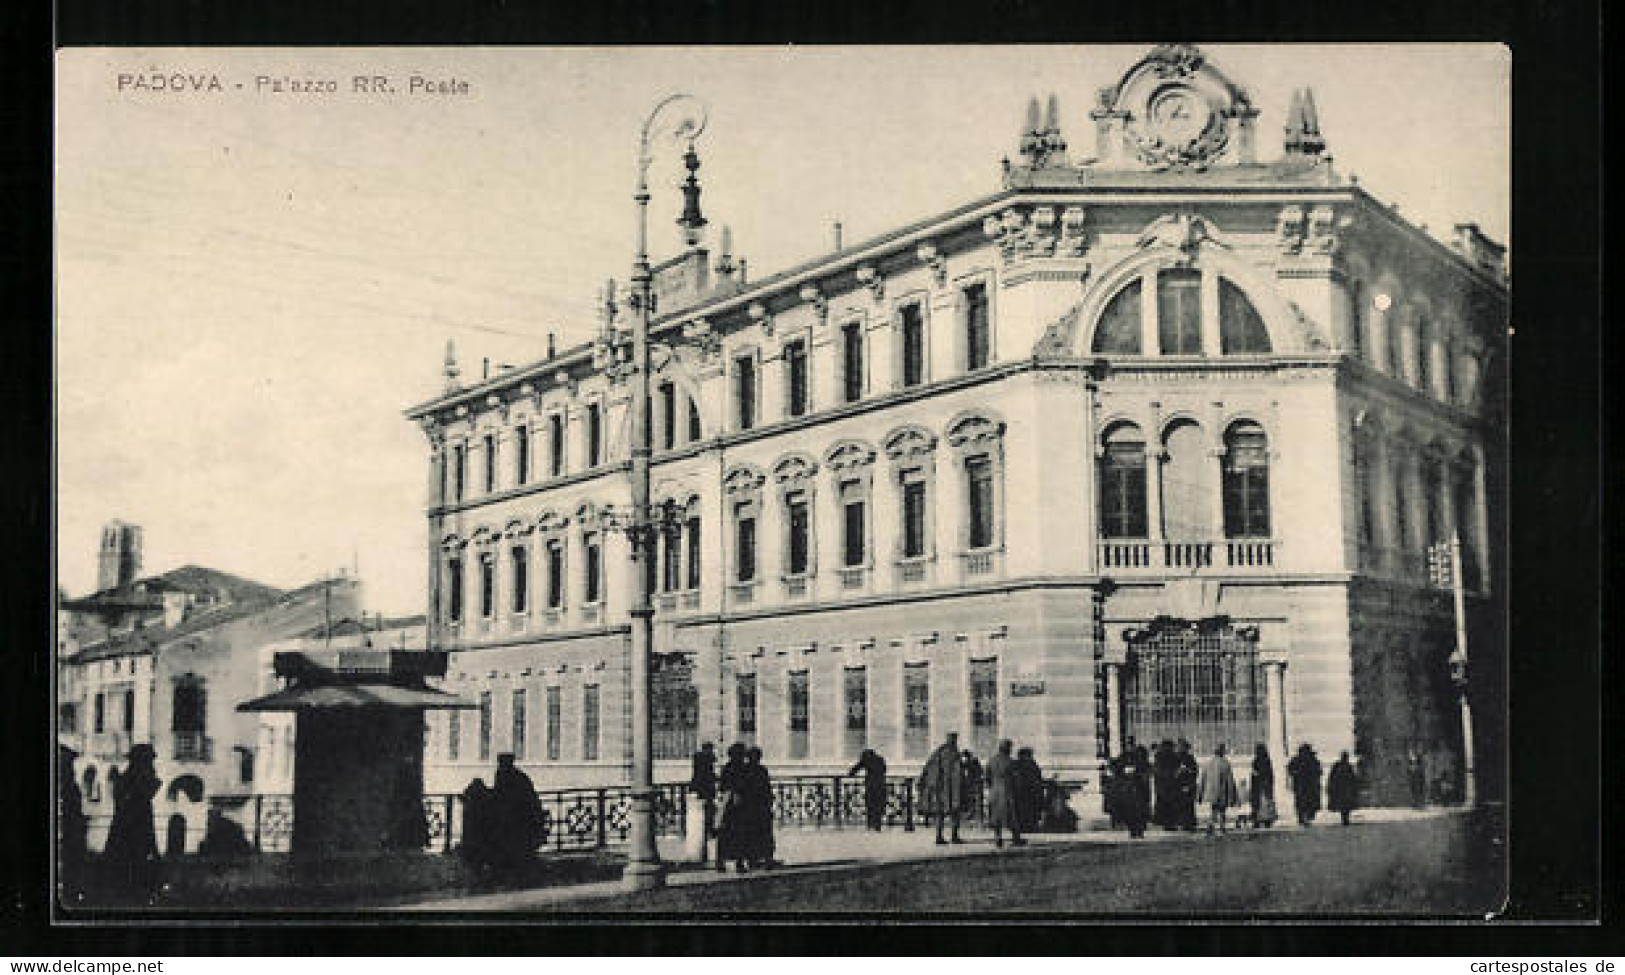 Cartolina Padova, Palazzo RR. Poste  - Padova (Padua)